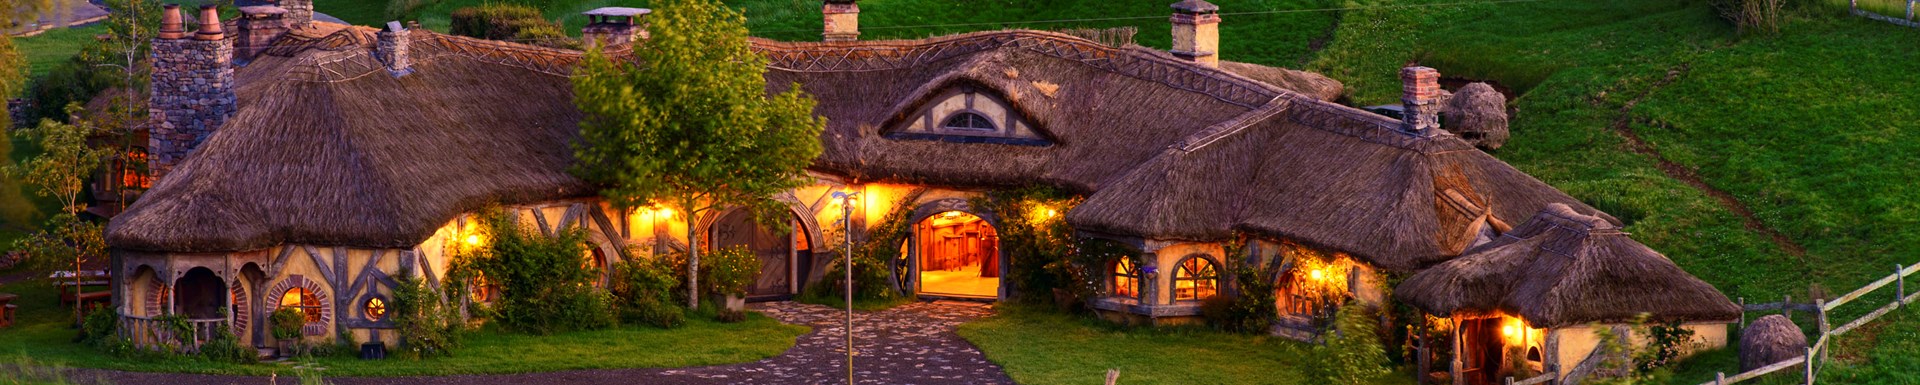 The Hobbiton Green Dragon Inn